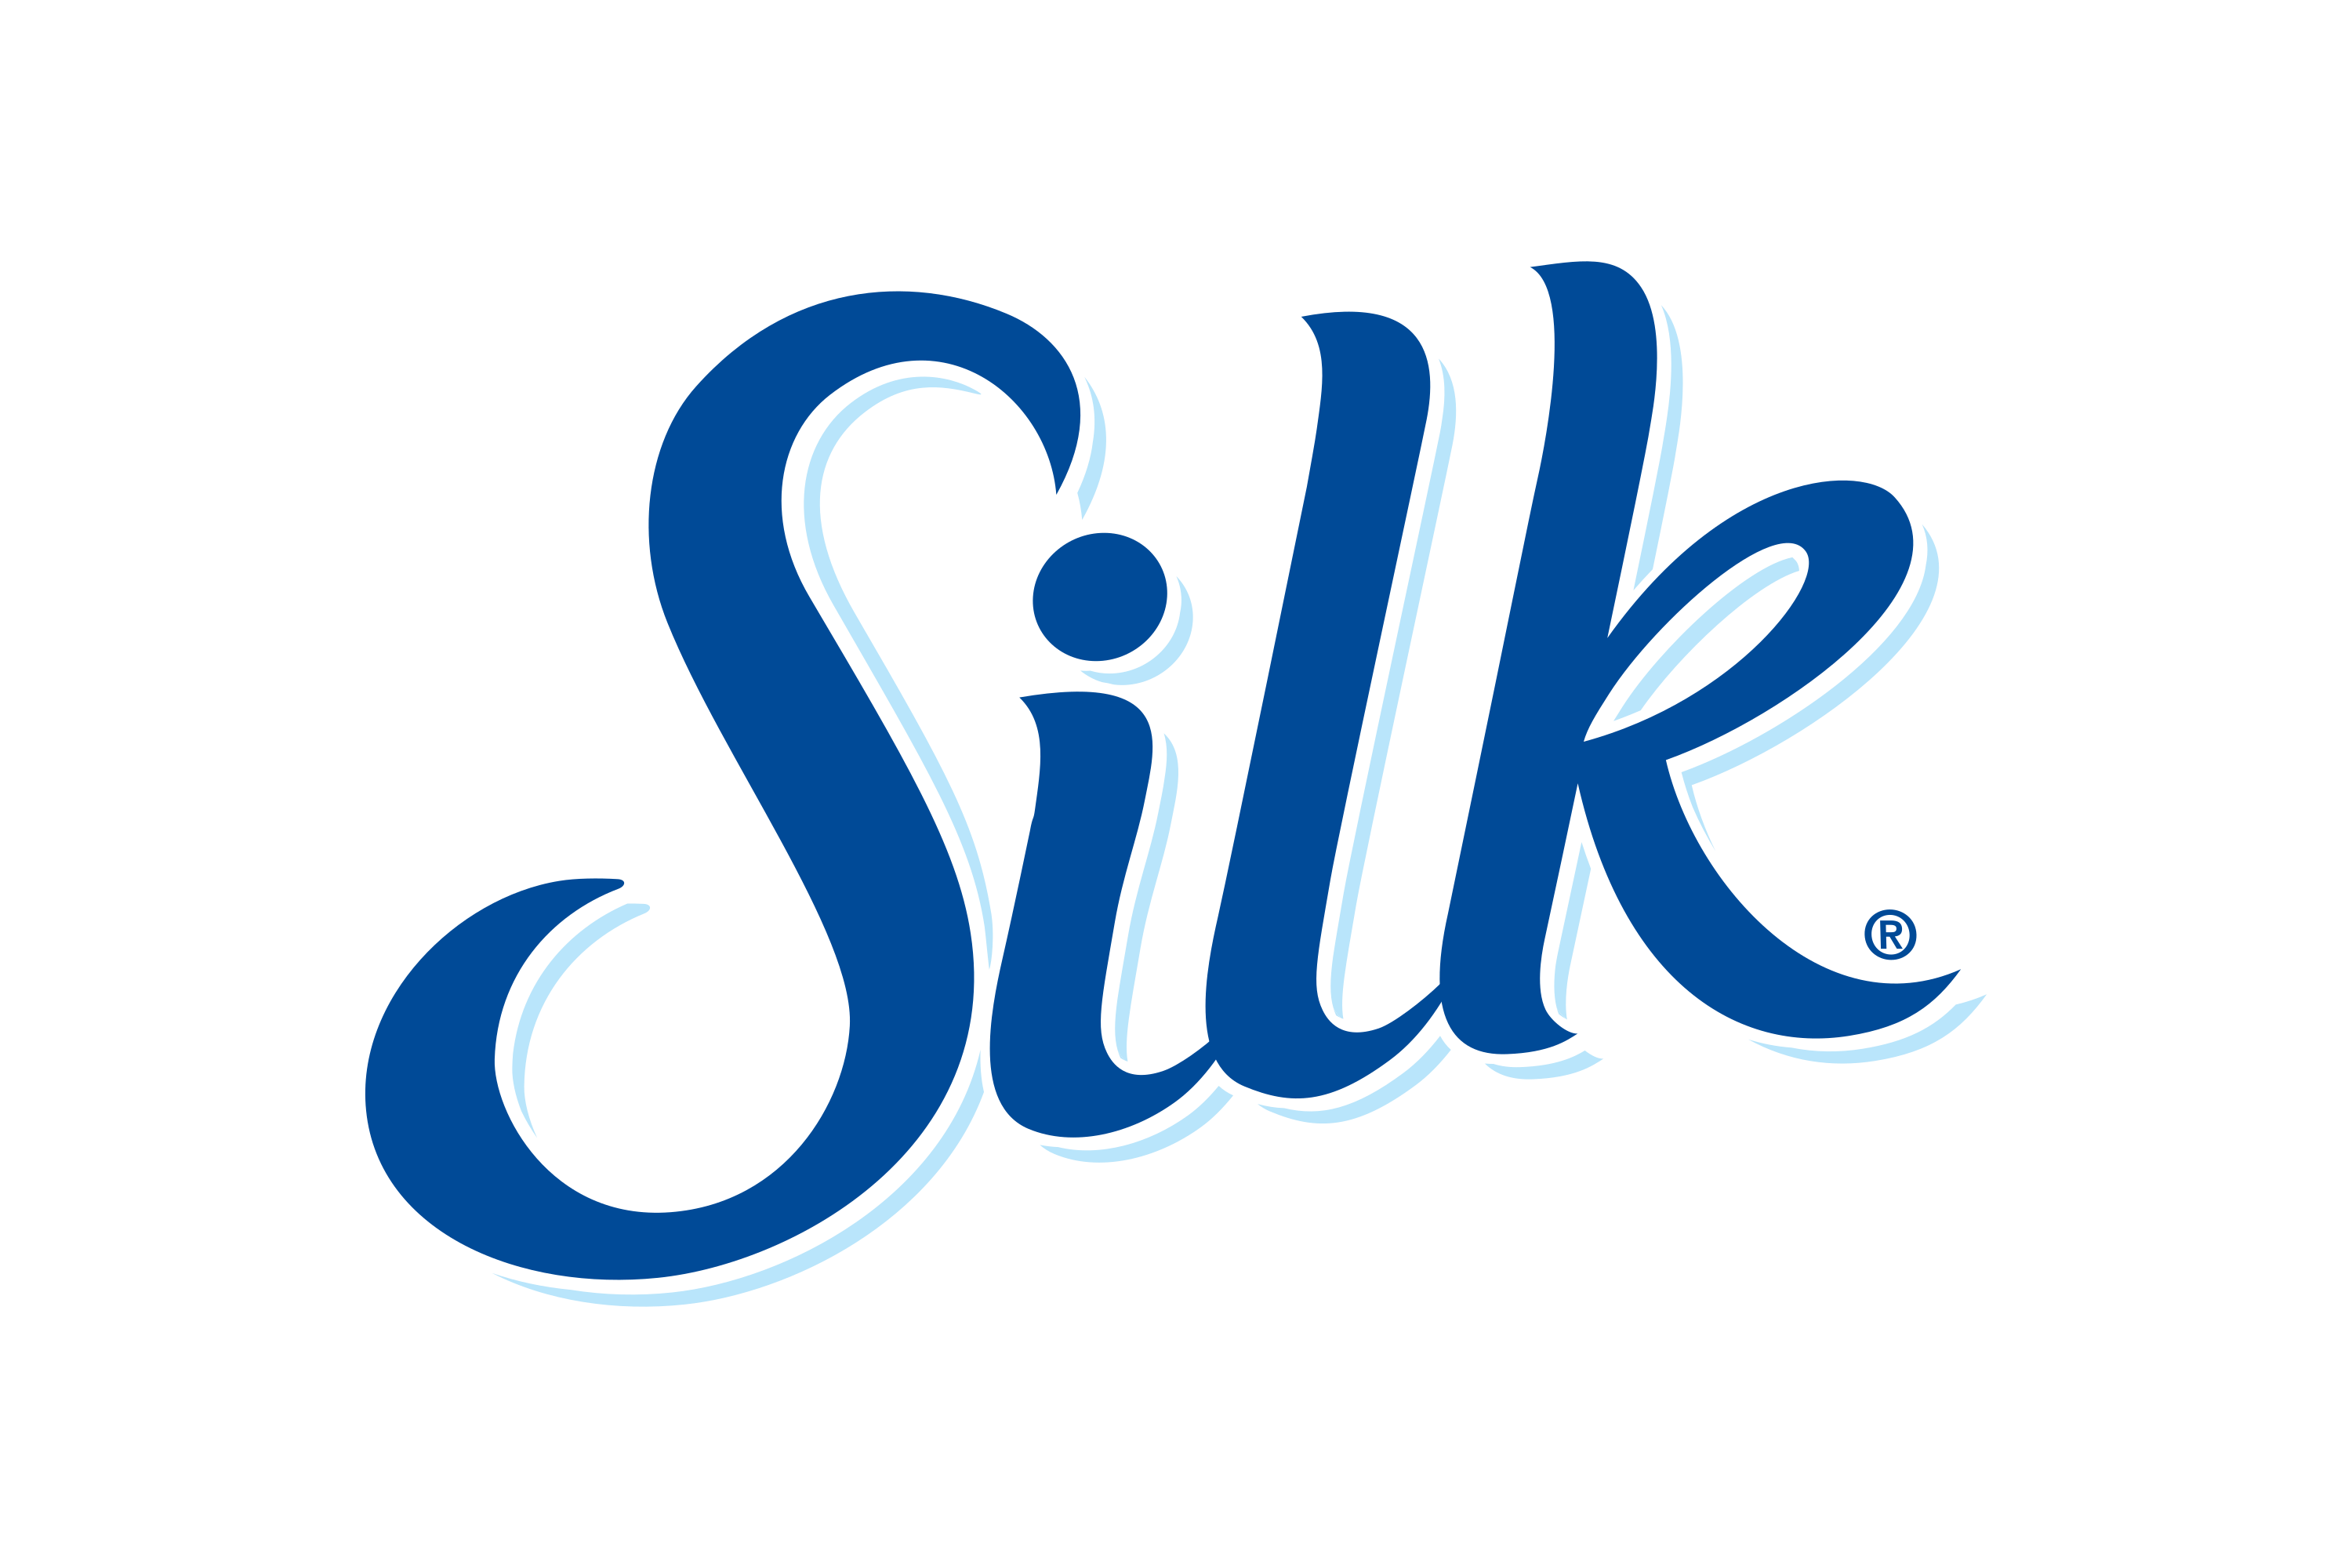 Silk Logo